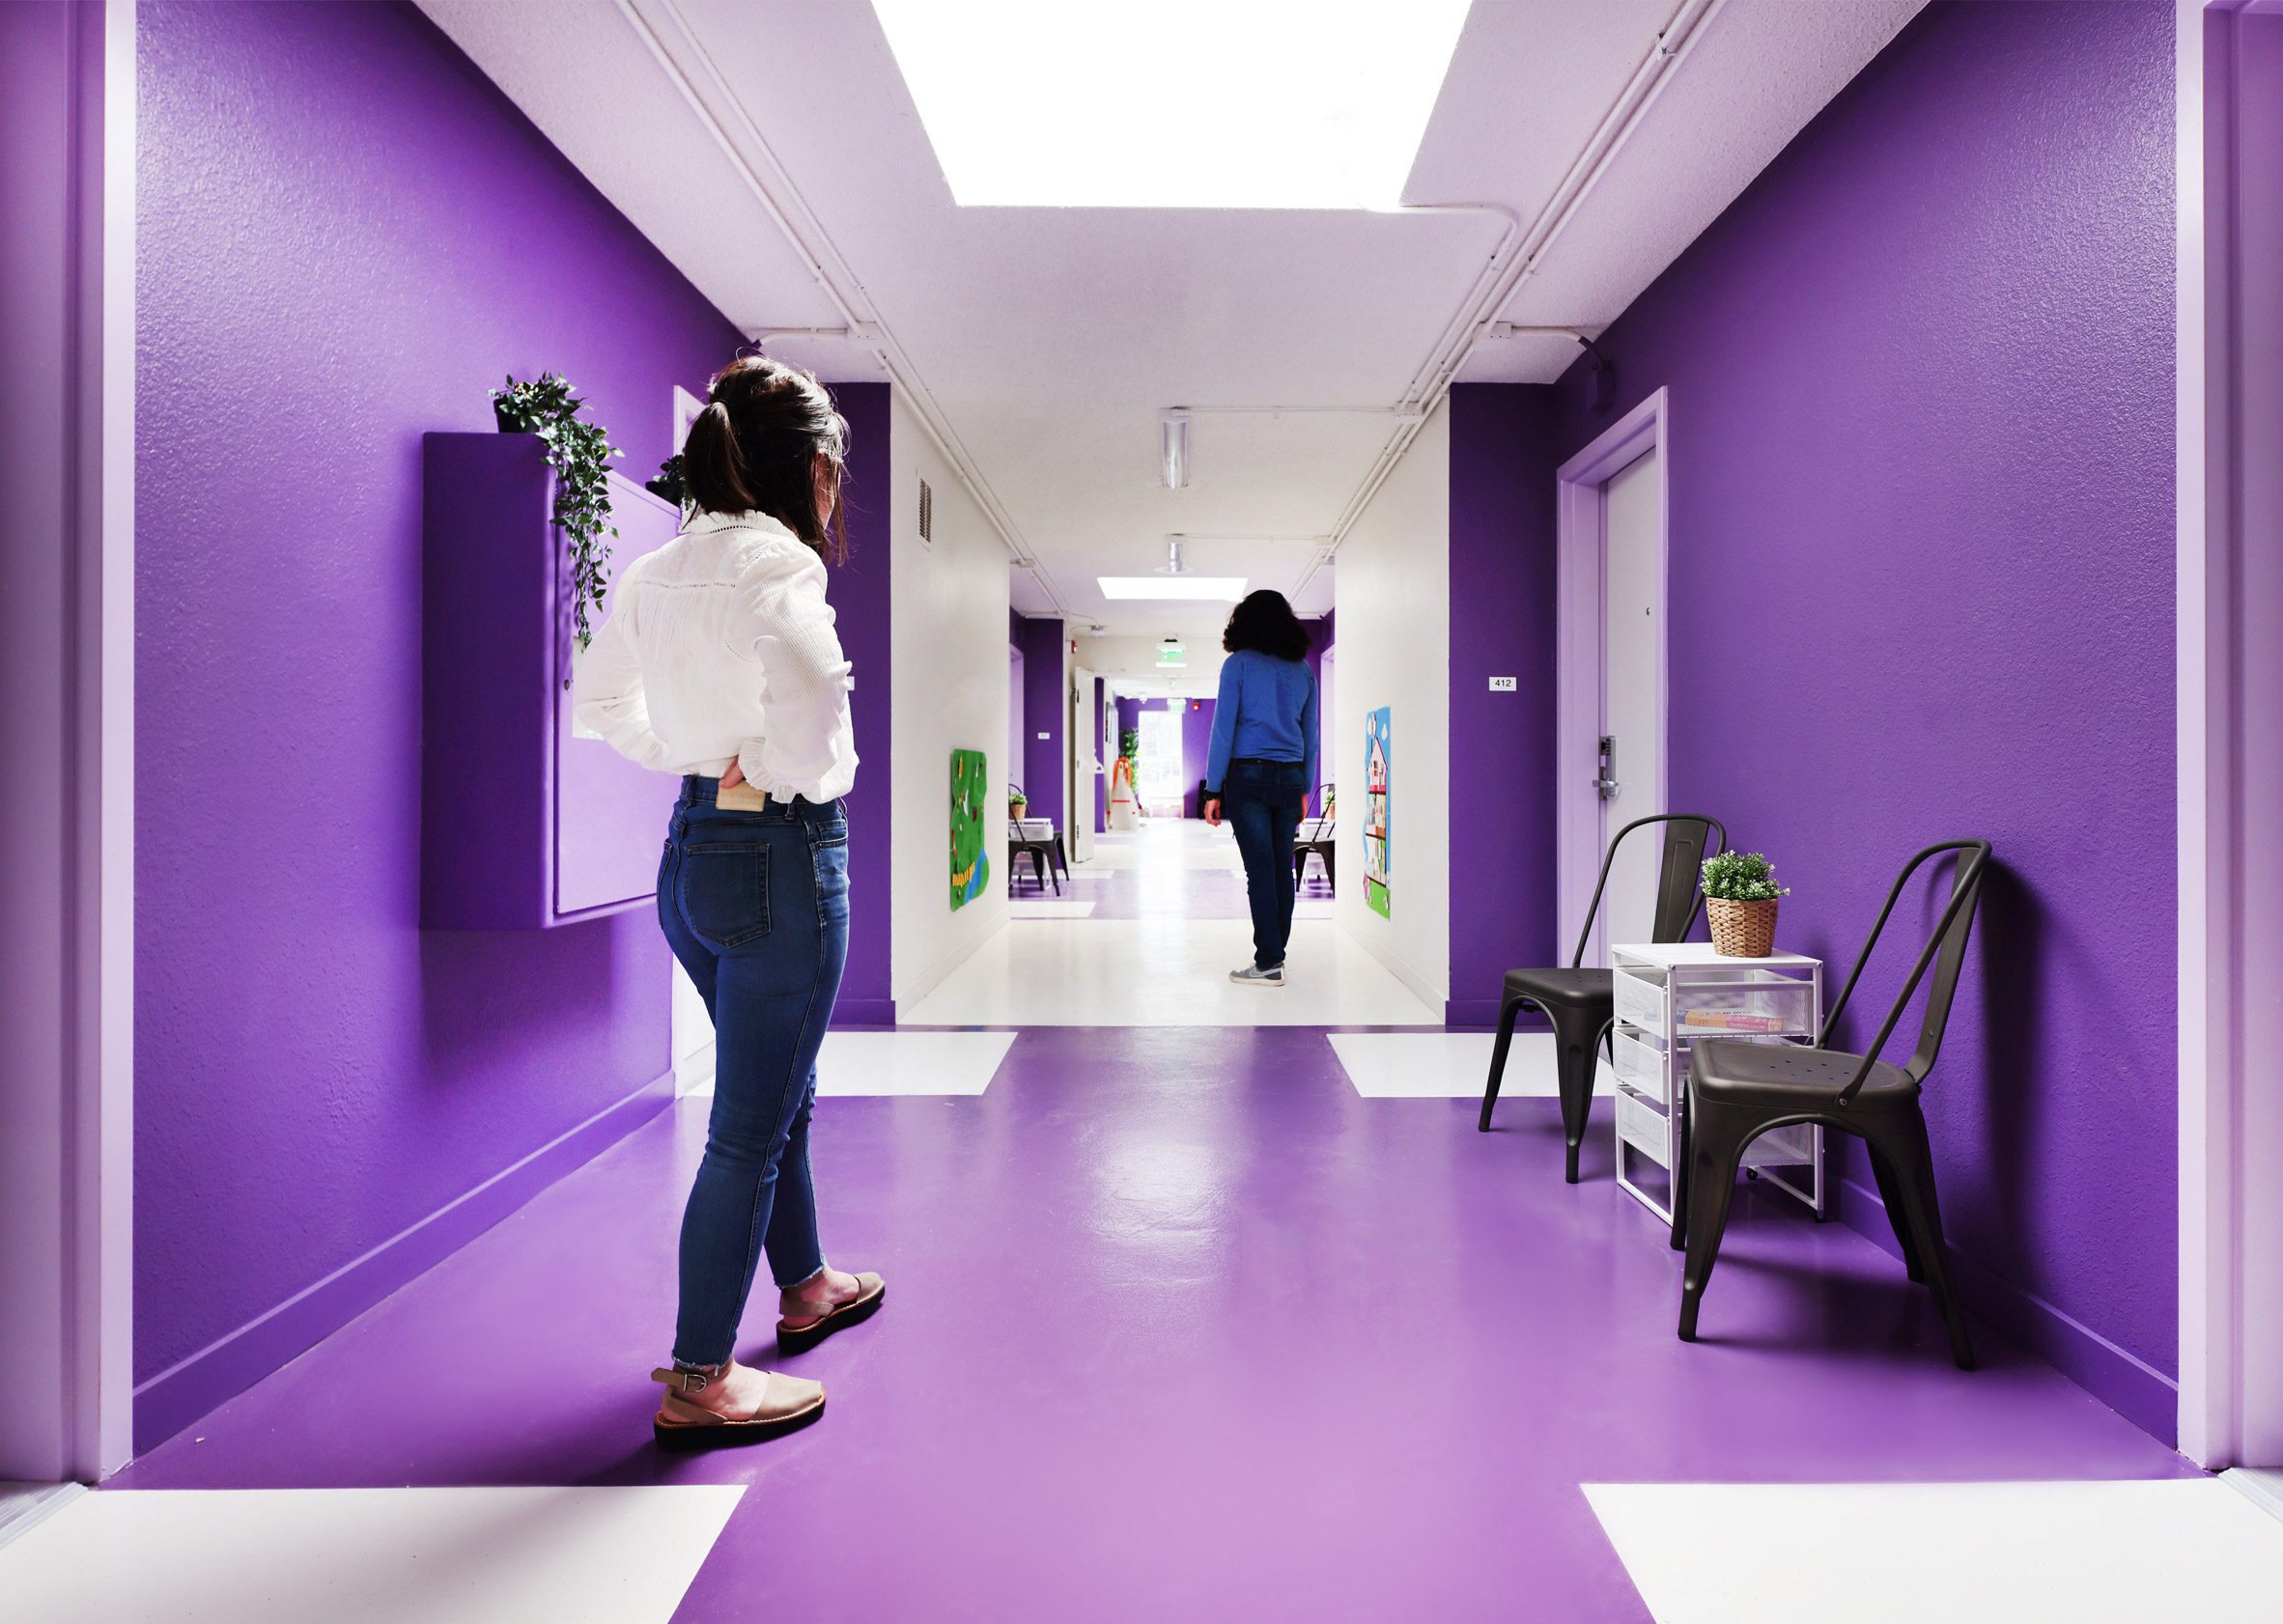 Interior corridor with purple and white glossy walls